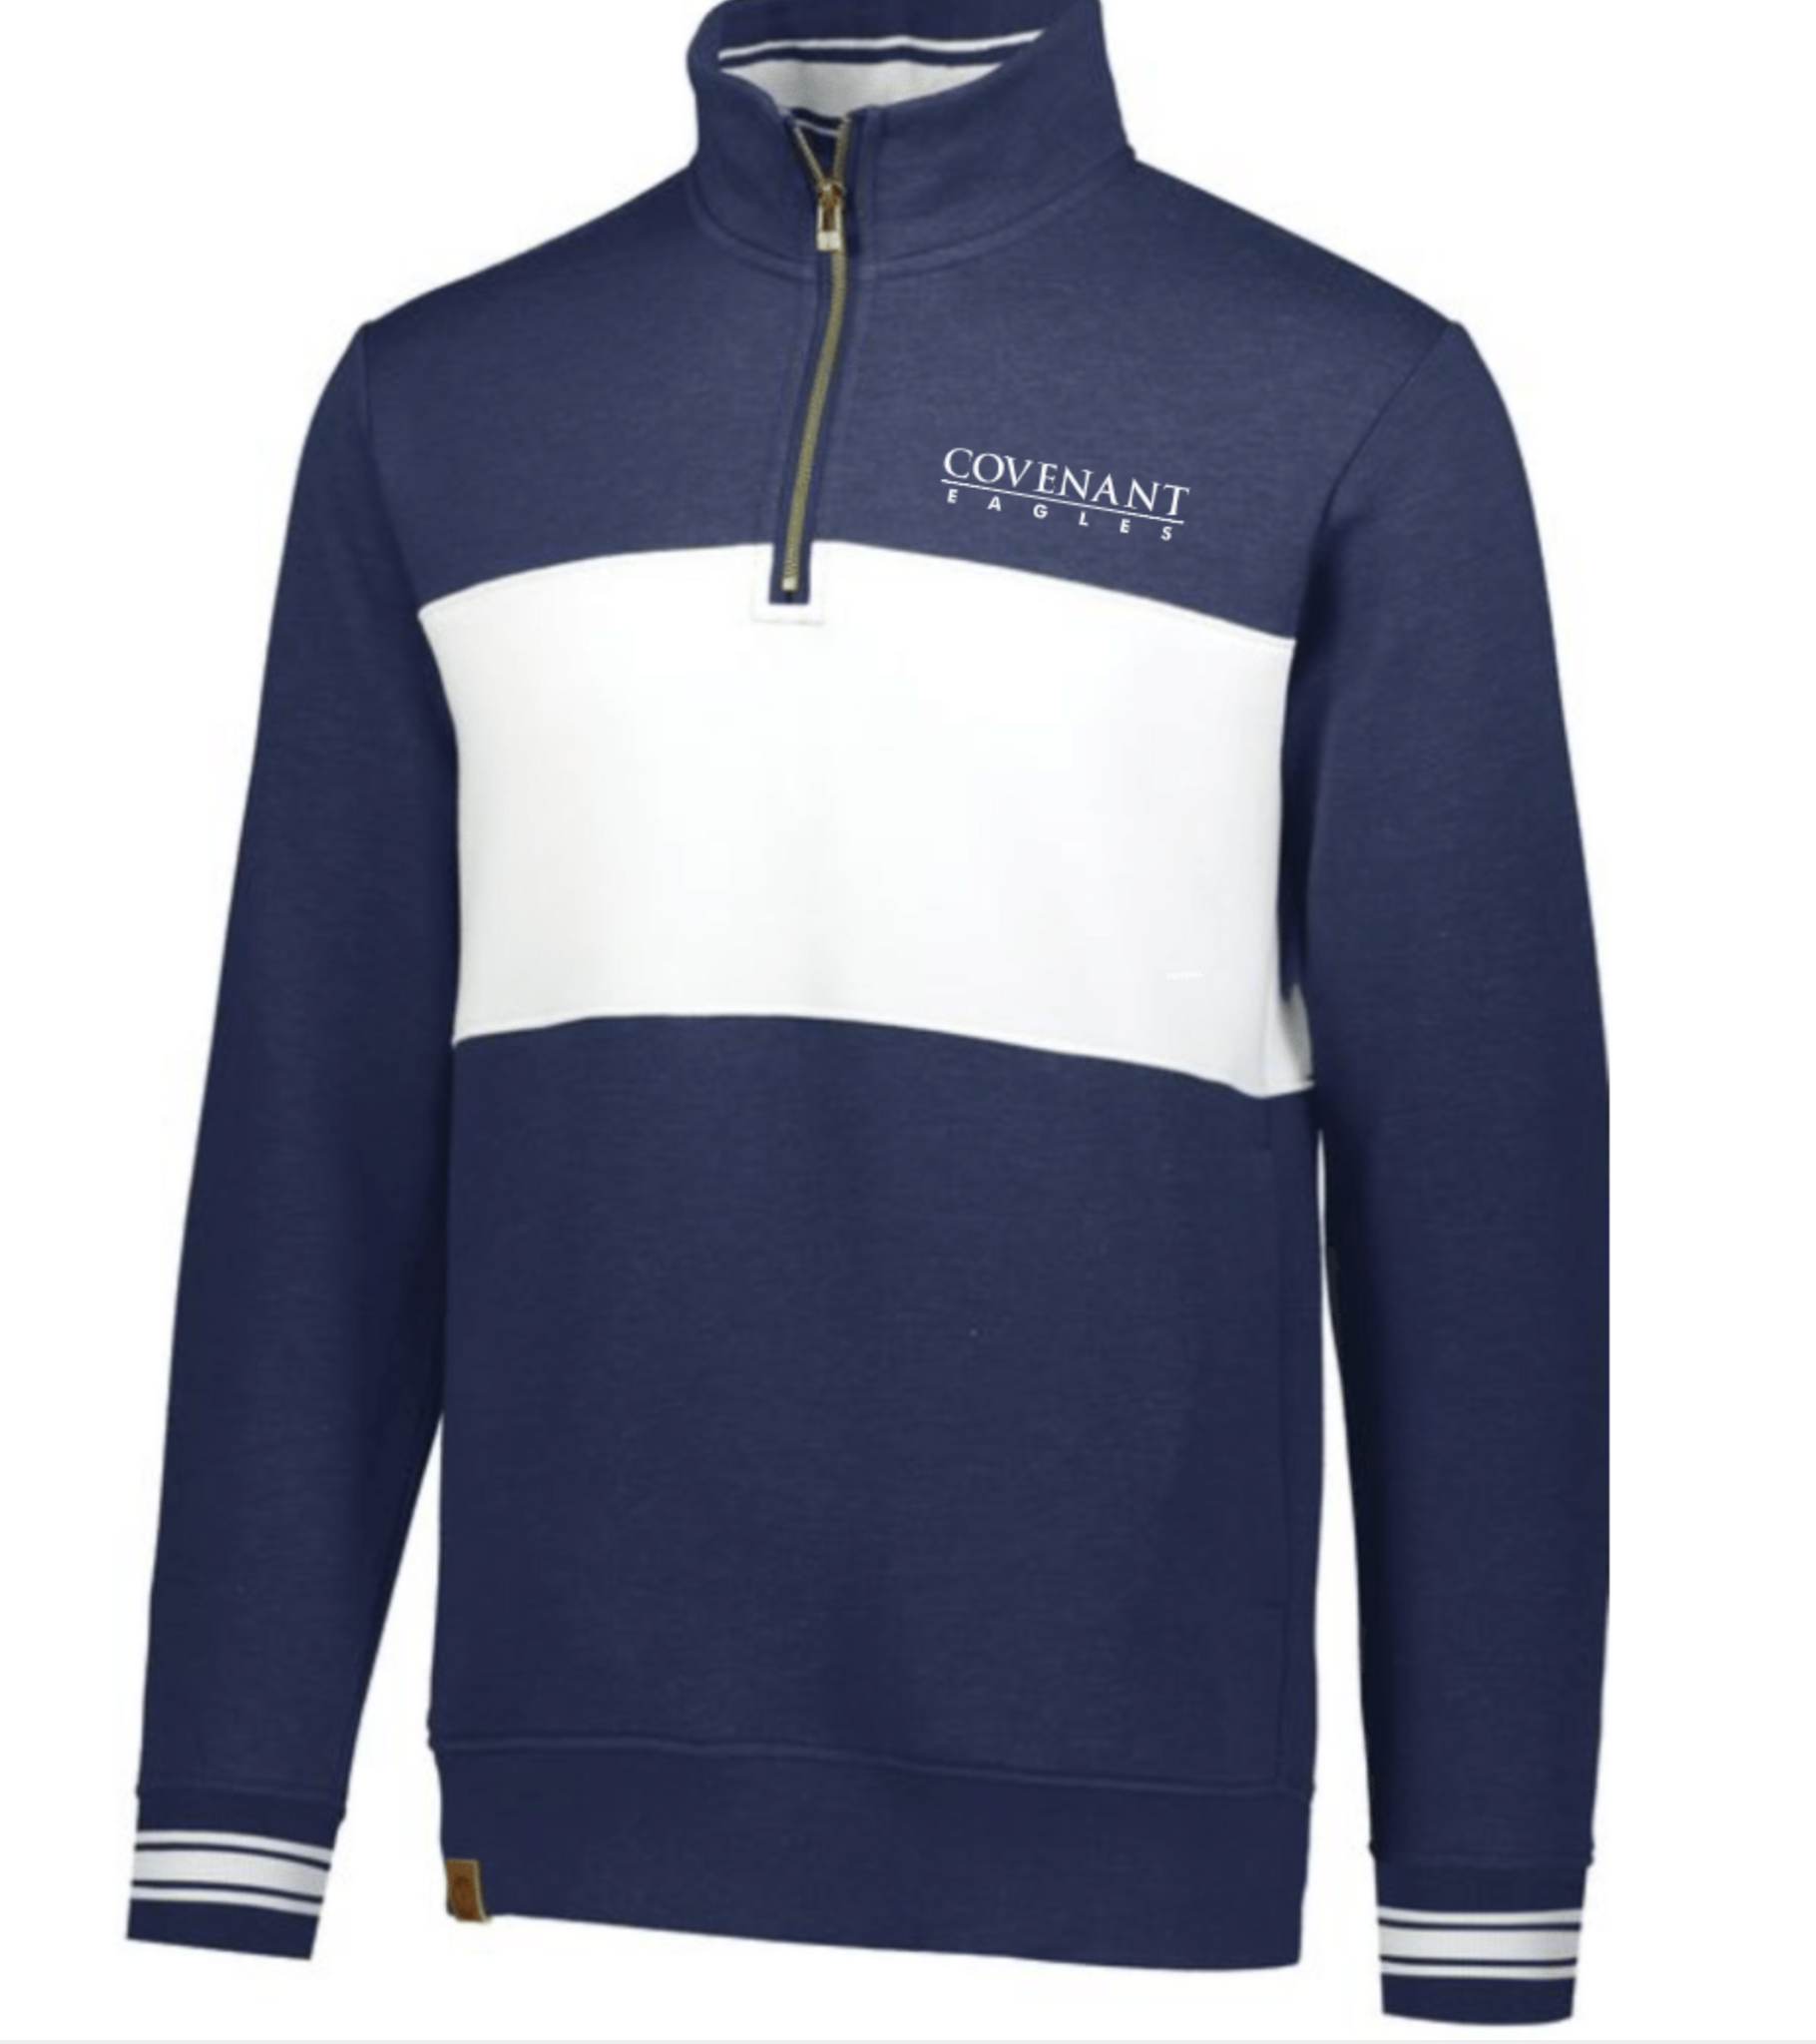 1/4 Zip Sweatshirt - Navy or Grey - white stripe